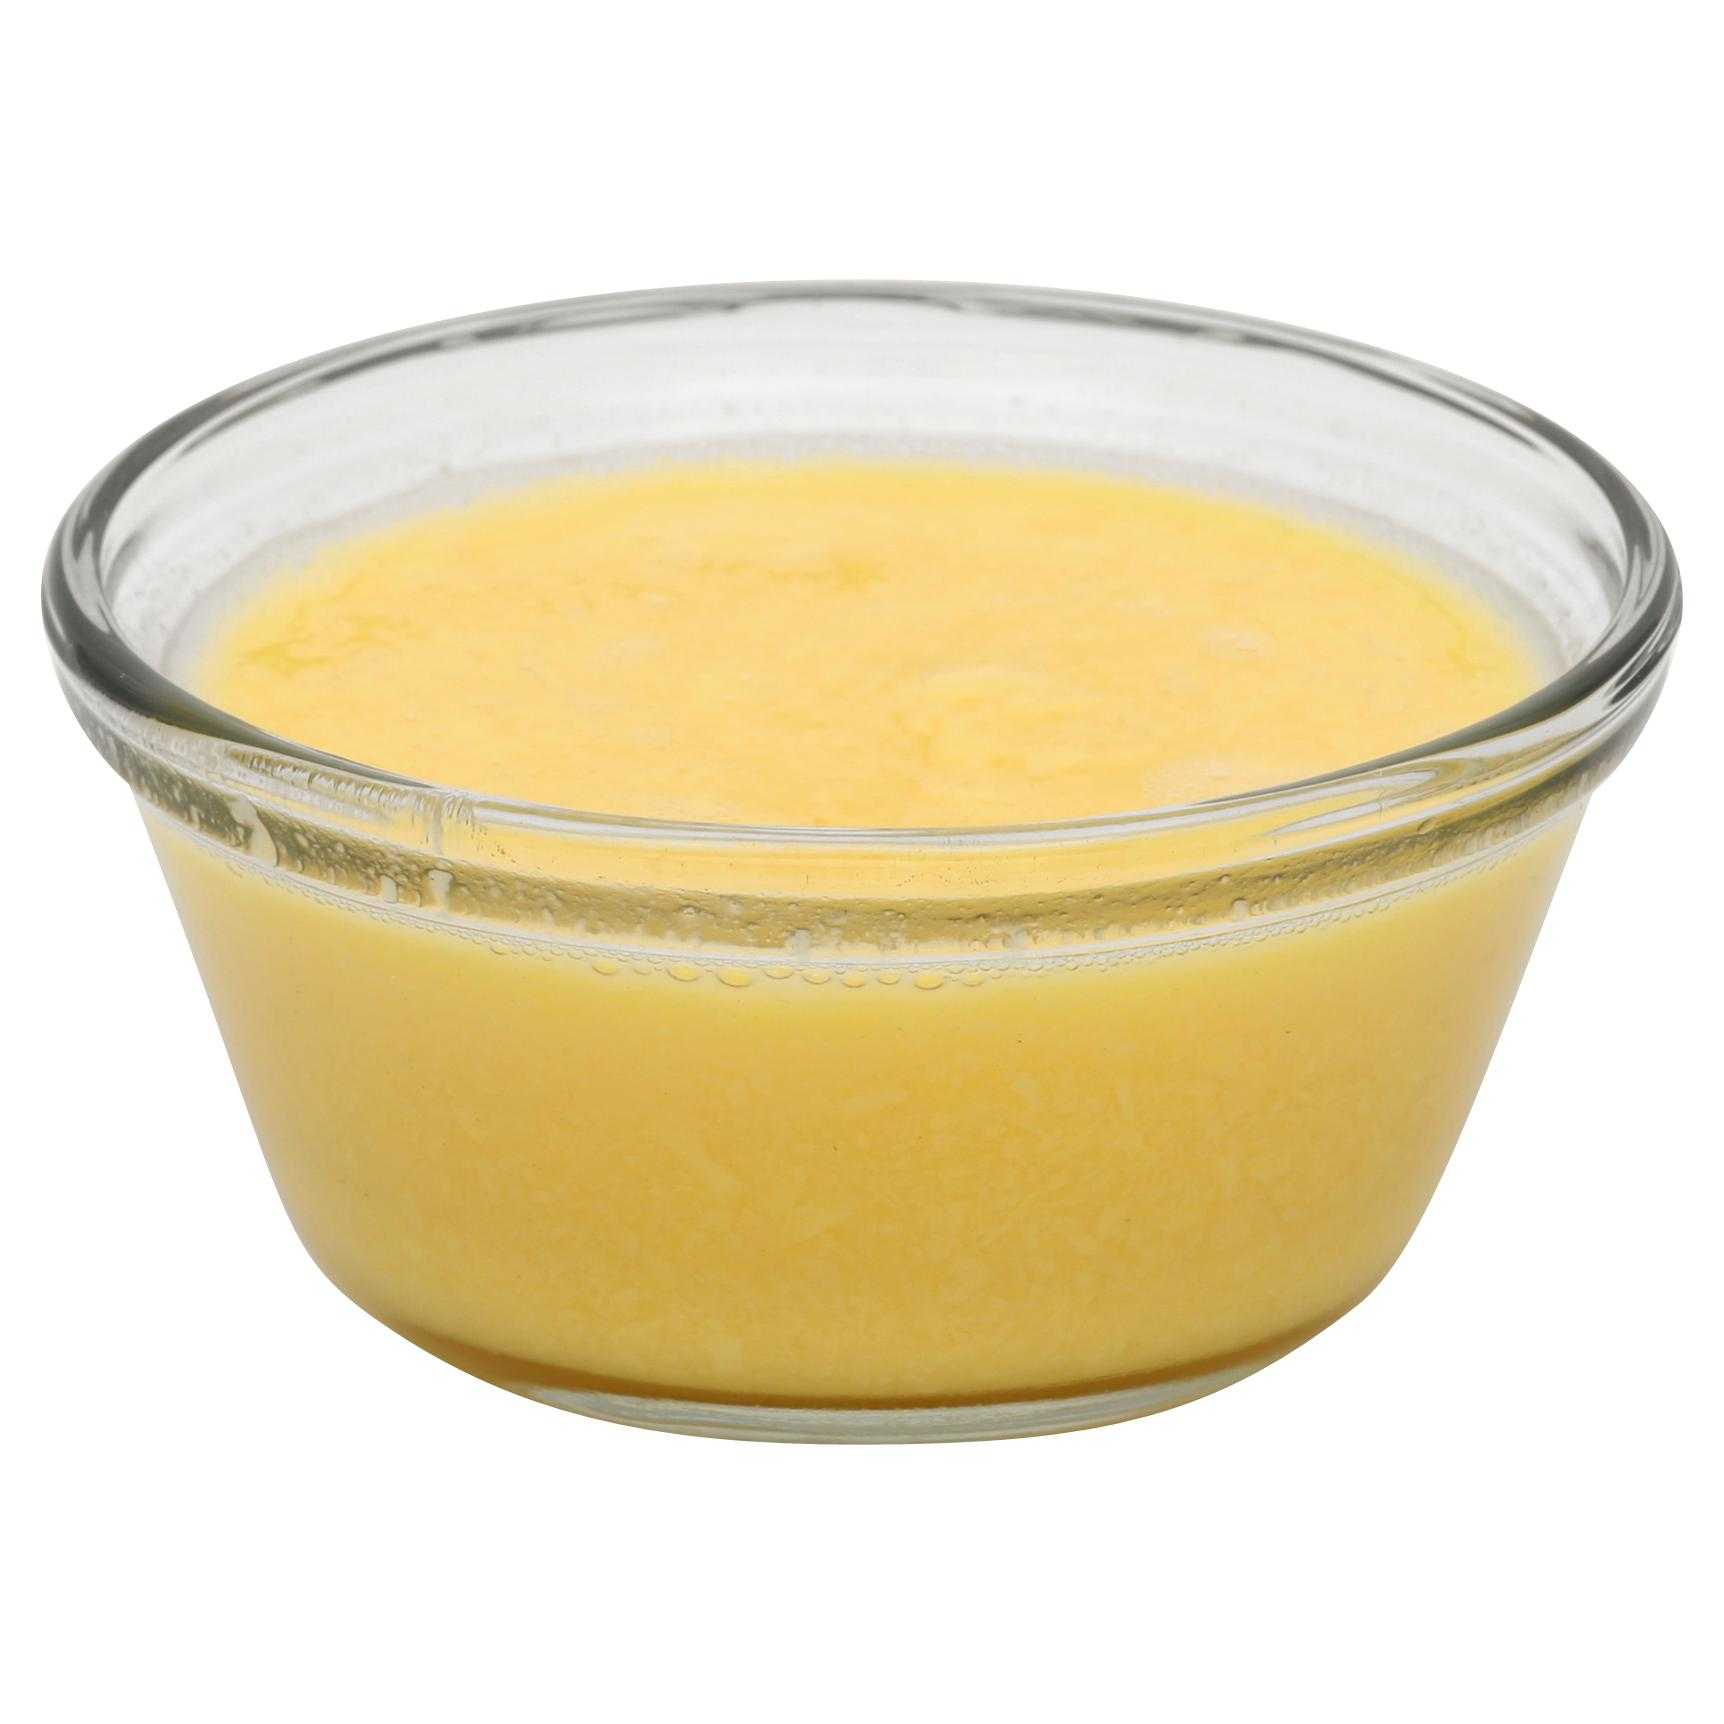 Papetti’s® Deluxe Frozen Low Fat, Low Cholesterol Liquid Eggs, 15/2 Lb Cartons